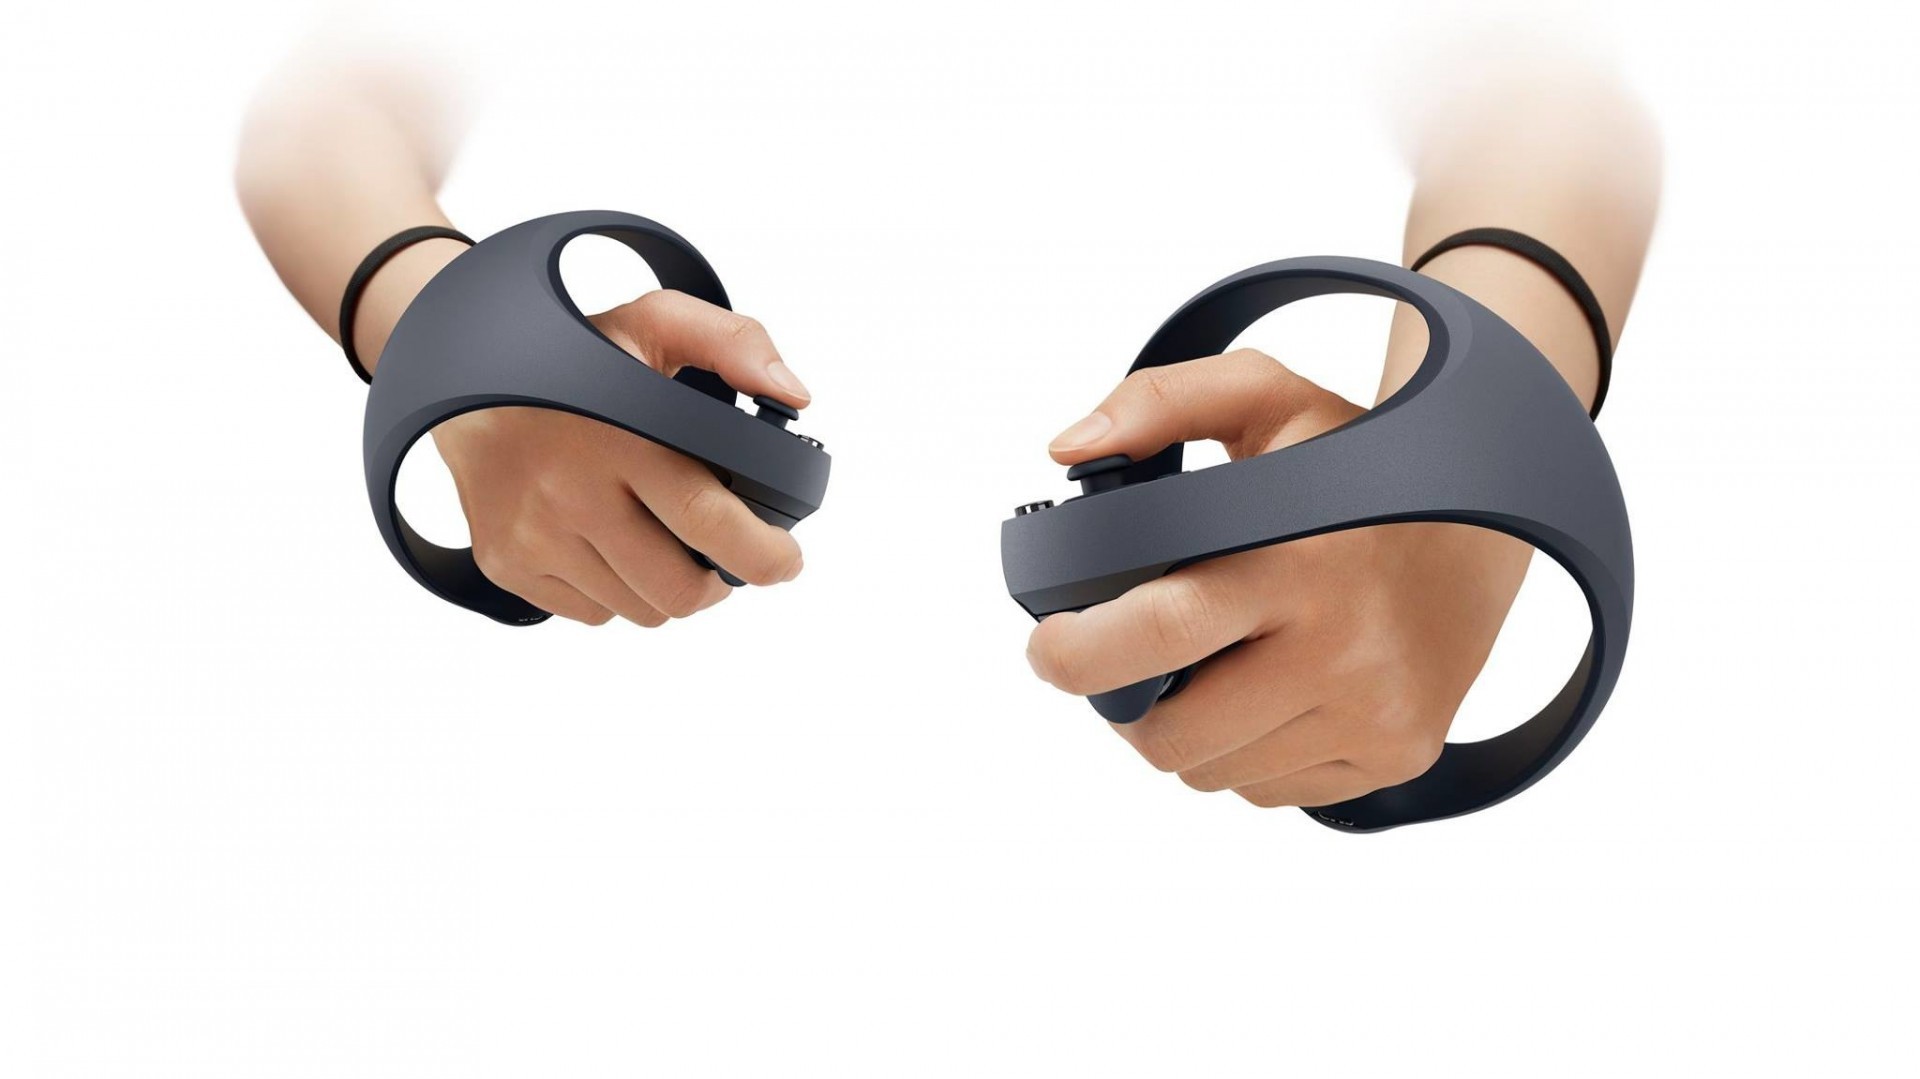 替下一代 PS VR 鋪路？Sony 展示 8K 解析度低延遲 VR 頭戴裝置研發成果